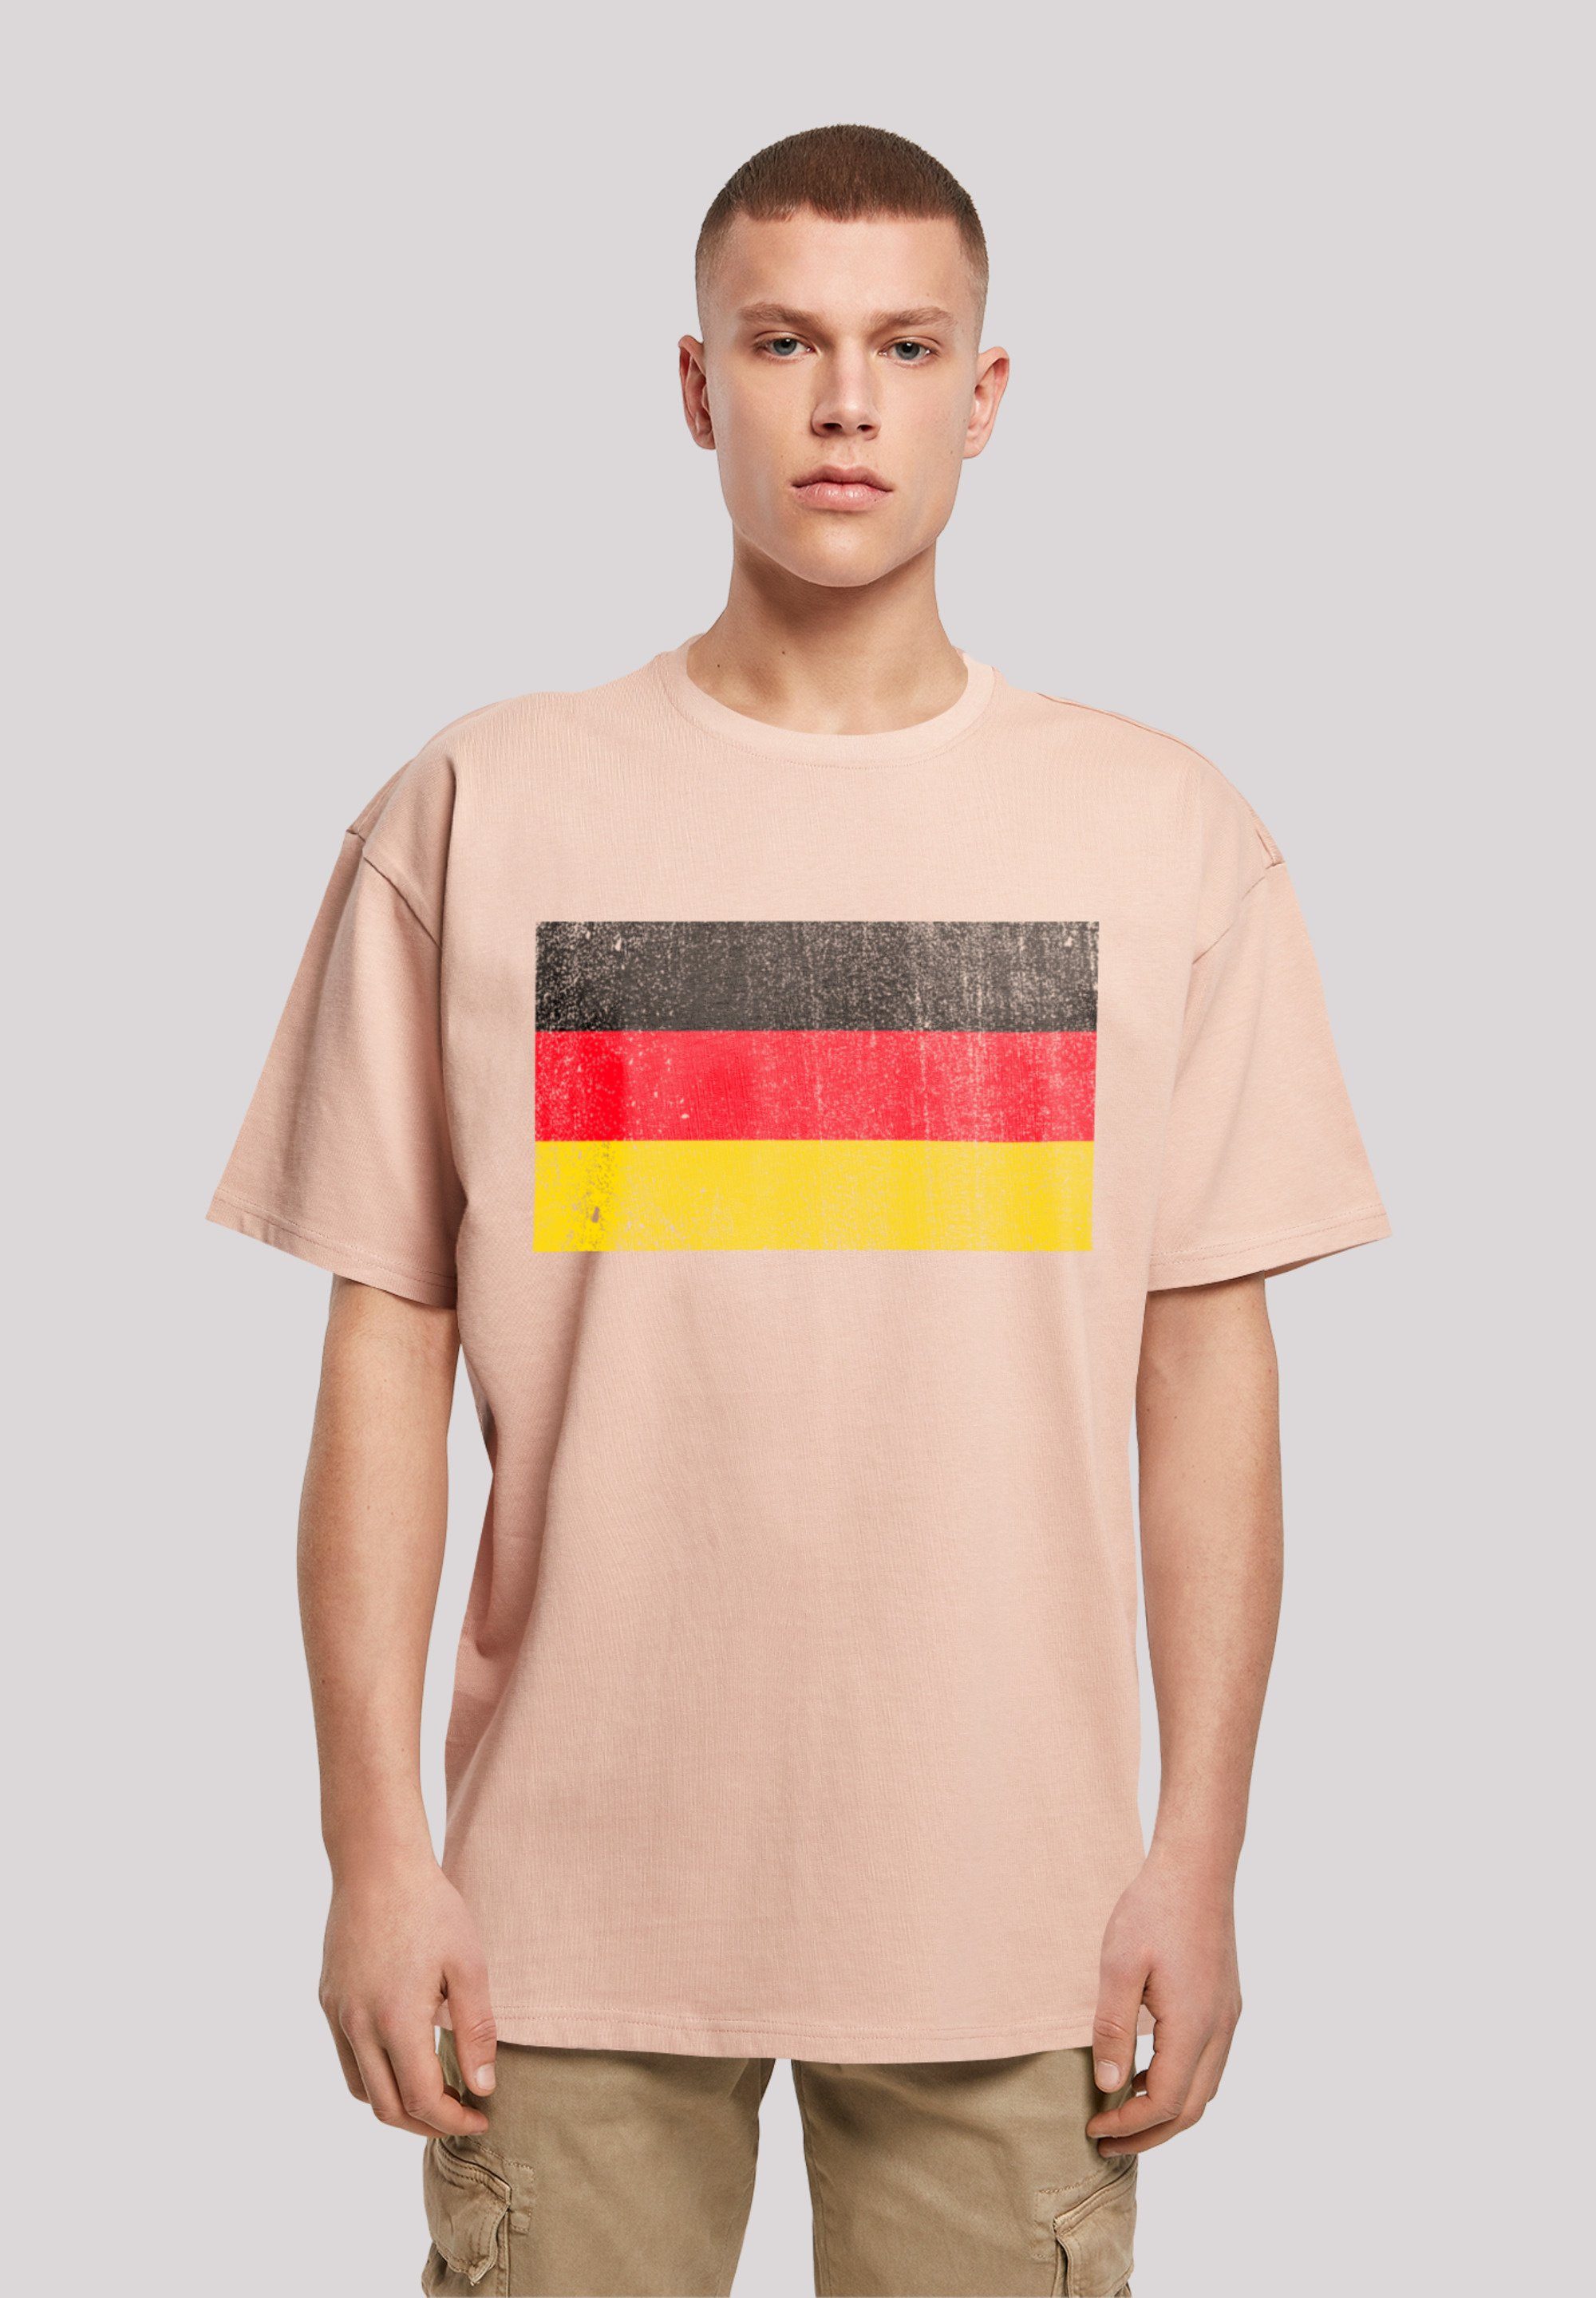 F4NT4STIC T-Shirt Germany Deutschland Flagge distressed Print amber